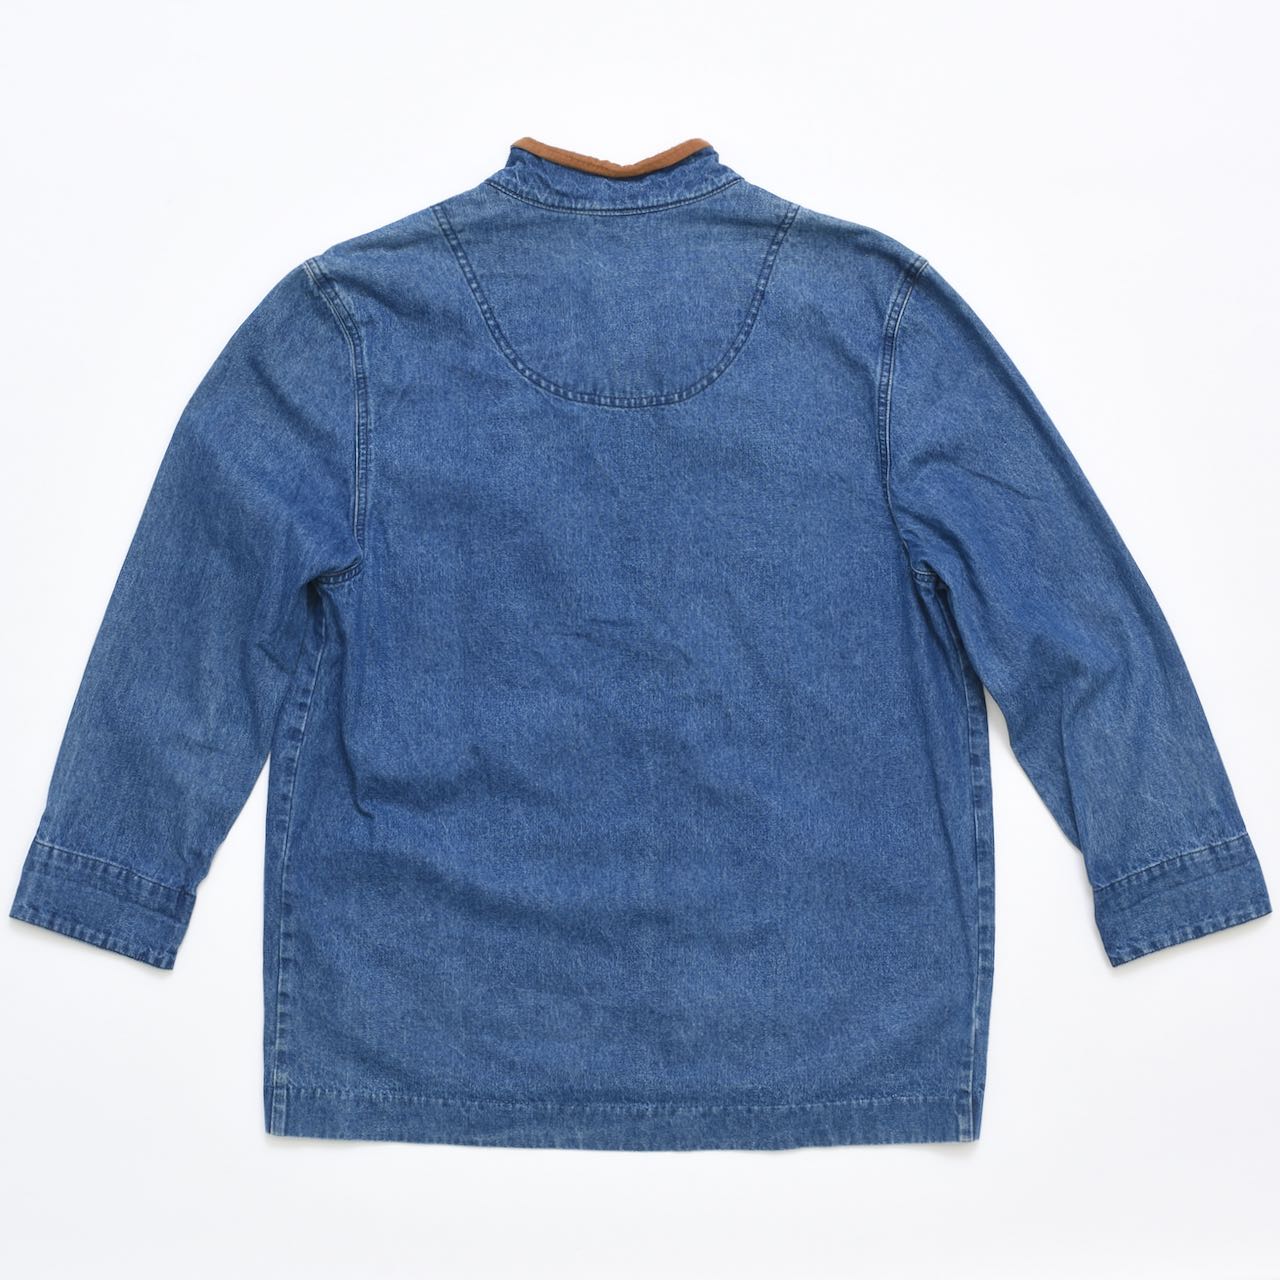 HdN Suede-Trimmed Denim Chore Coat, Vintage Select